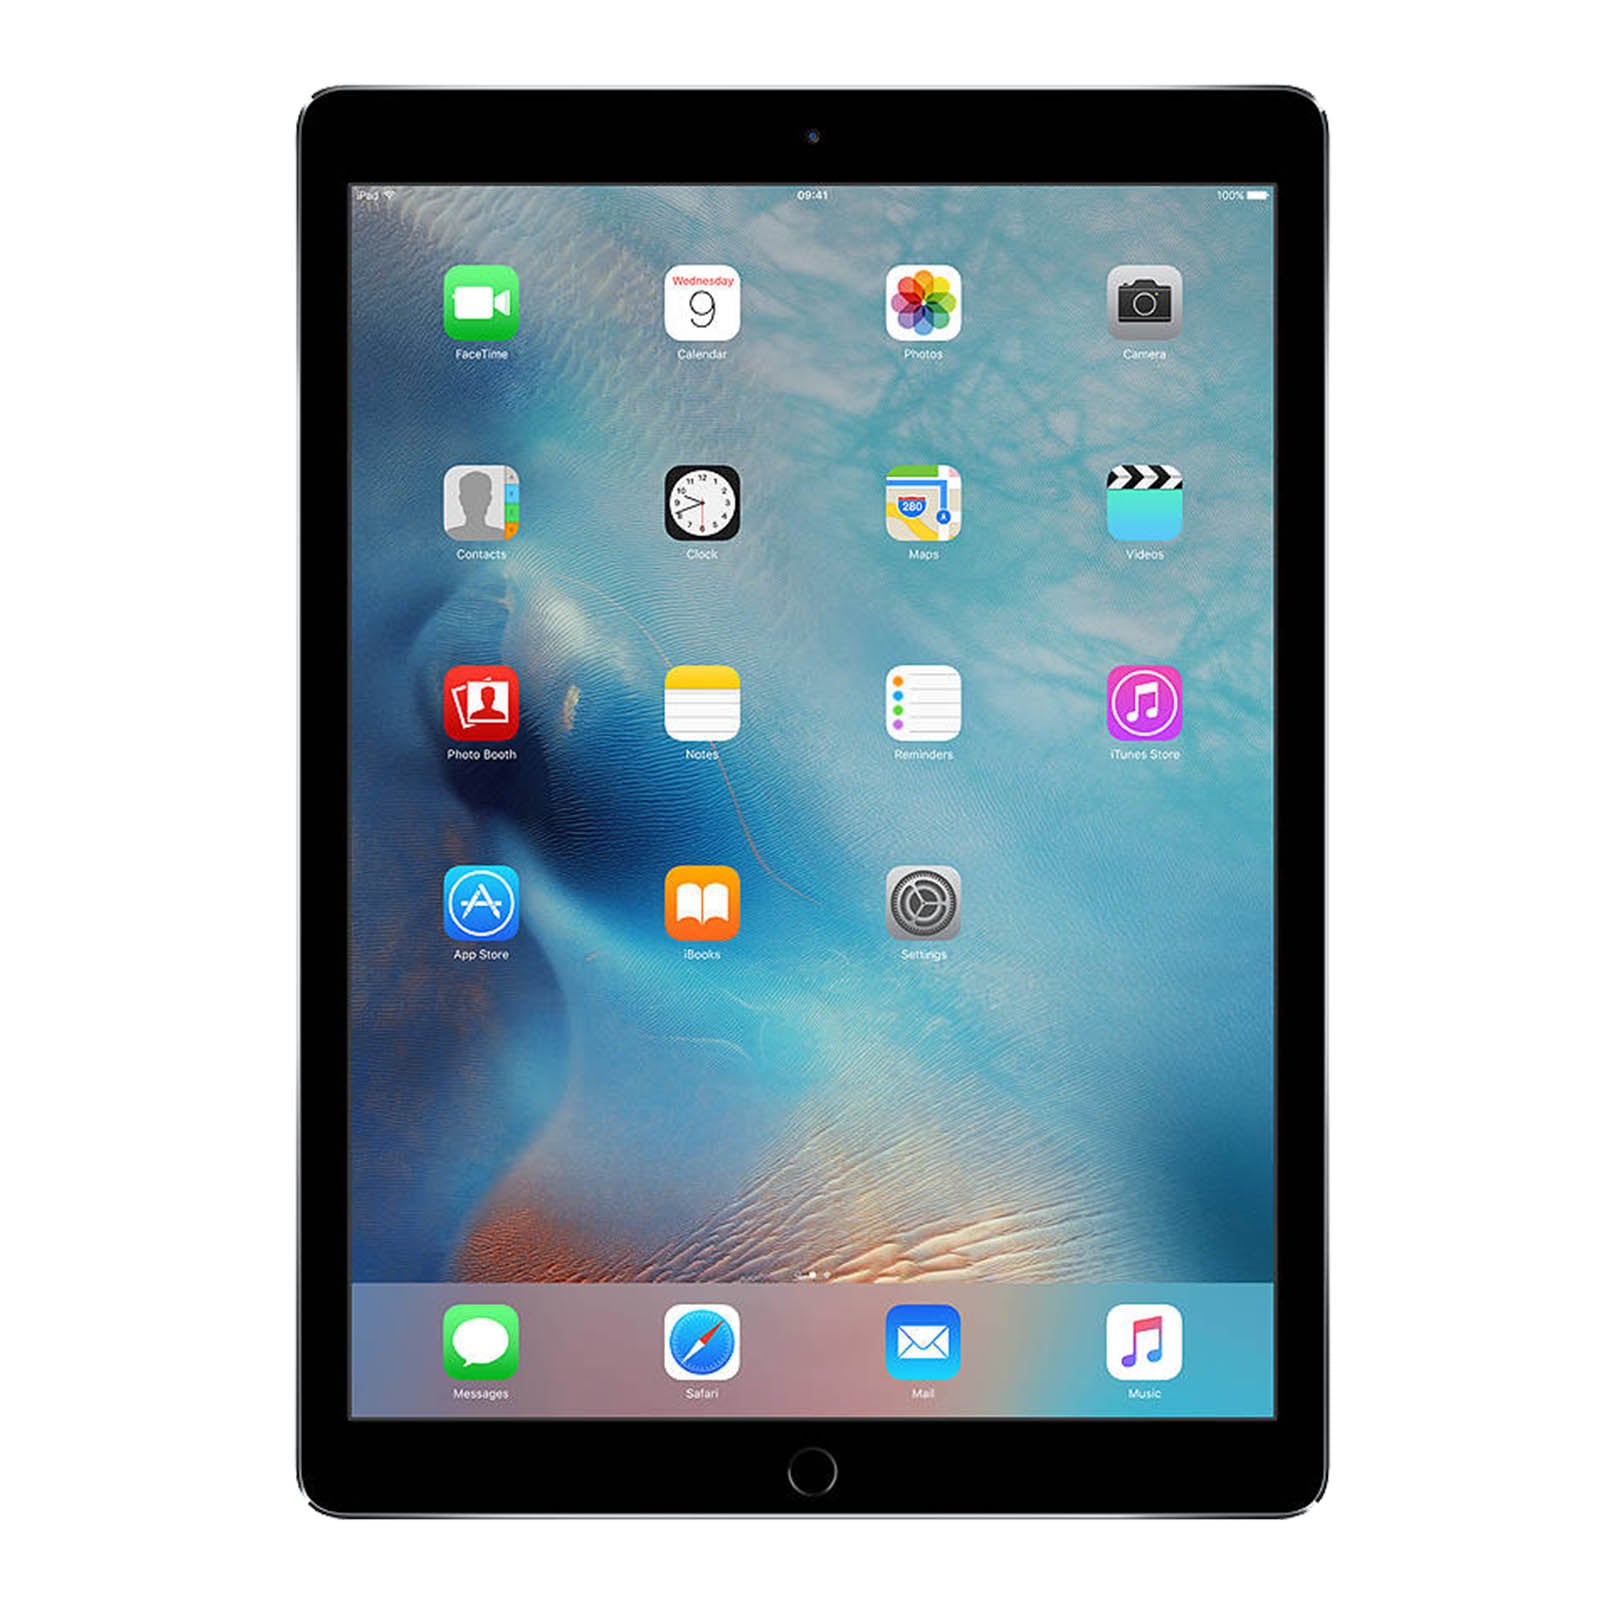 iPad Pro 12.9 Inch 3rd Gen 256GB Space Grey Good - WiFi